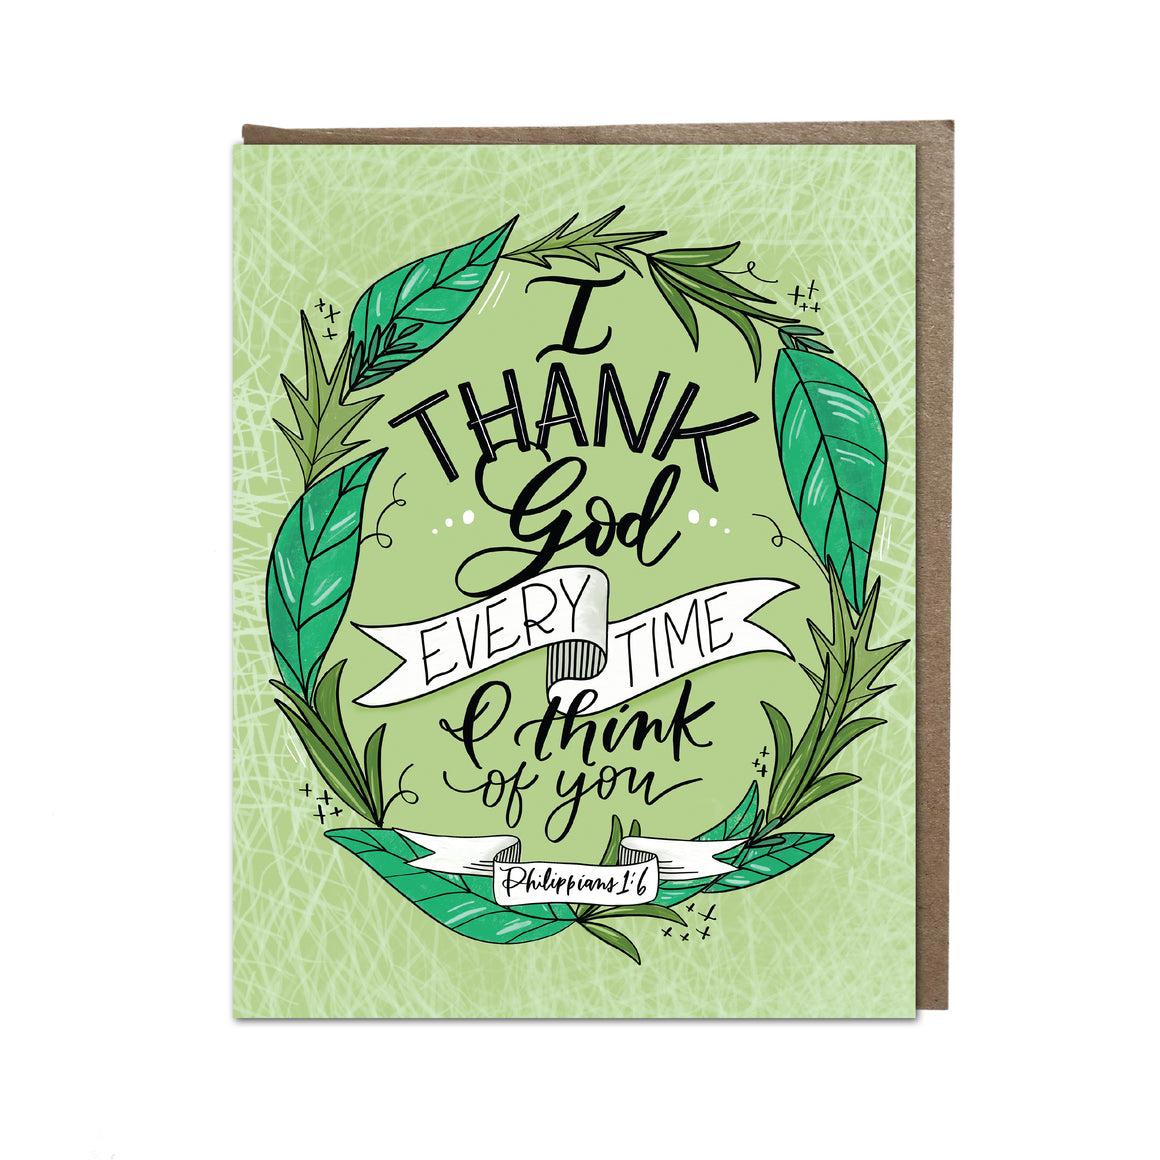 "I Thank God" card